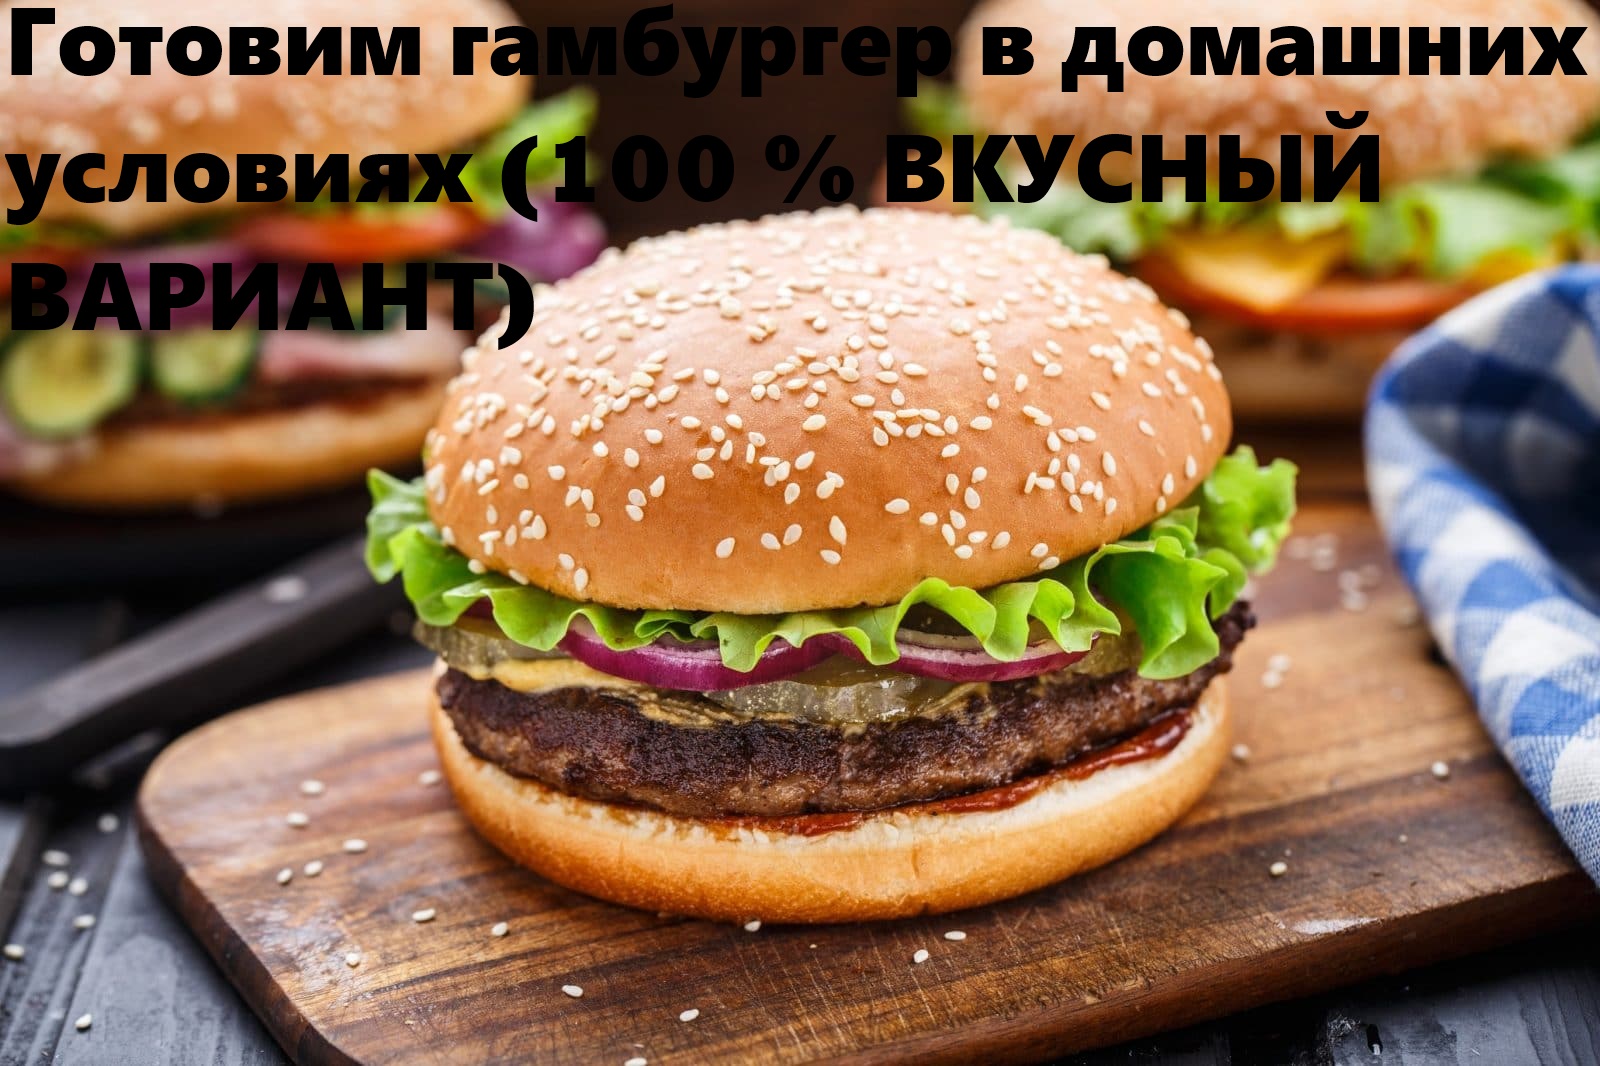 Готовим гамбургер в домашних условиях (100% ВКУСНЫЙ РЕЦЕПТ)